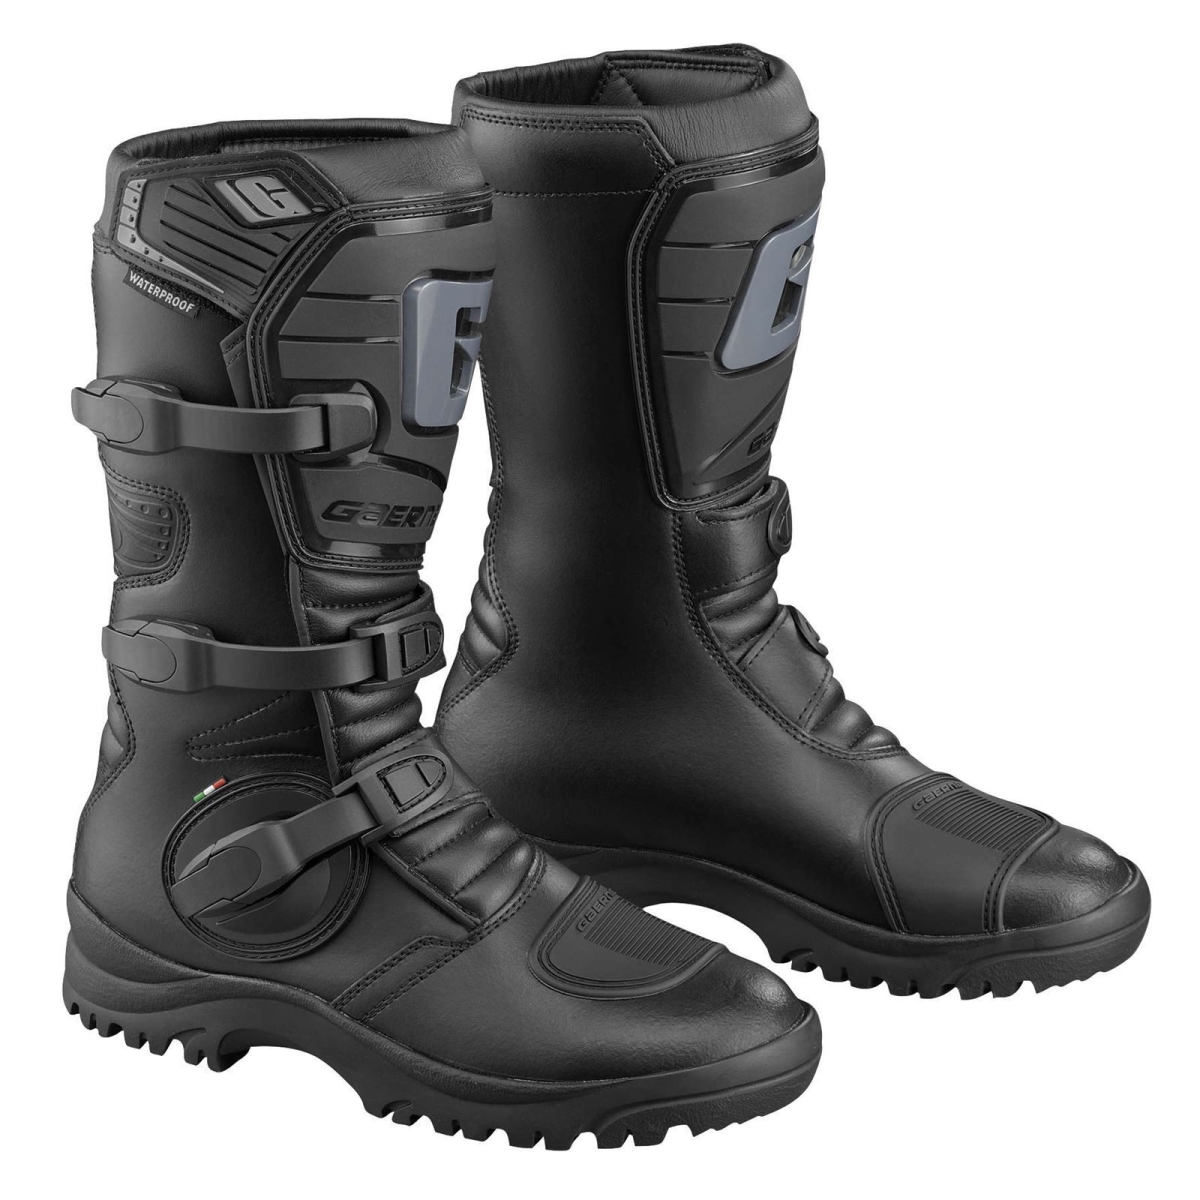 2525-001-11 G Adventure Riding Boot, Black - Size 11 -  Gaerne